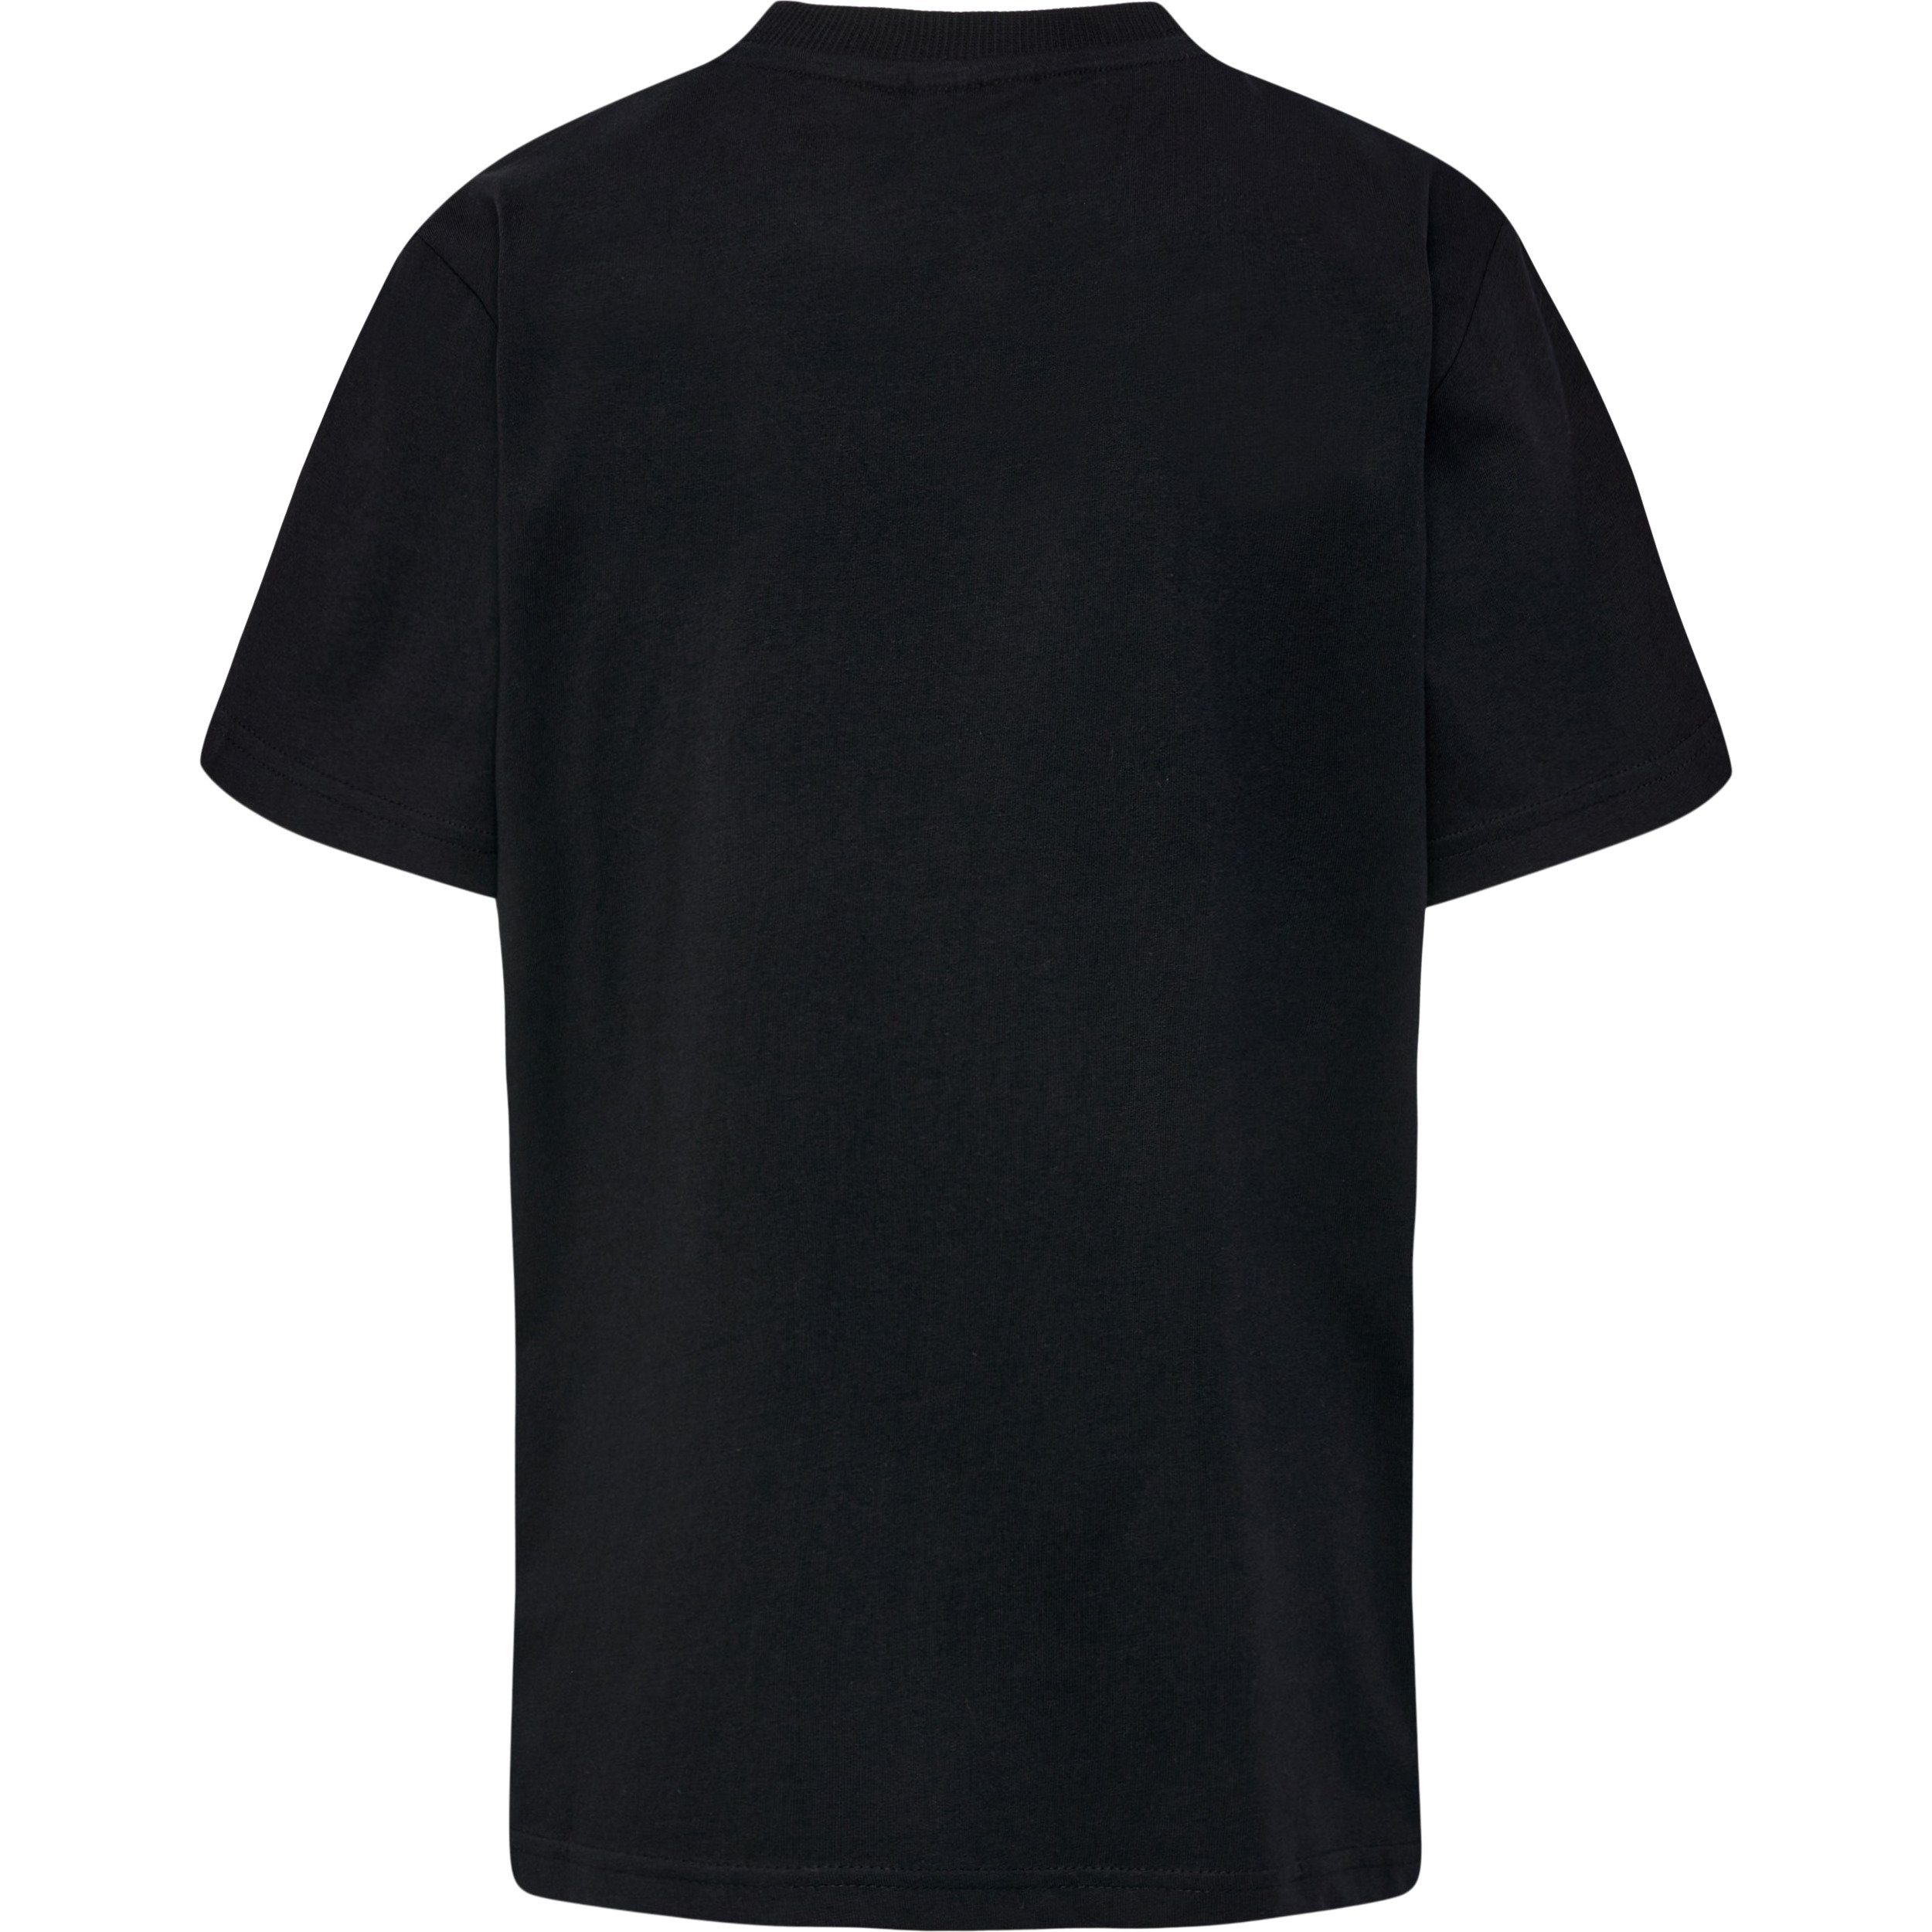 Short T-Shirt für - Kinder Sleeve T-SHIRT black hummel DARE